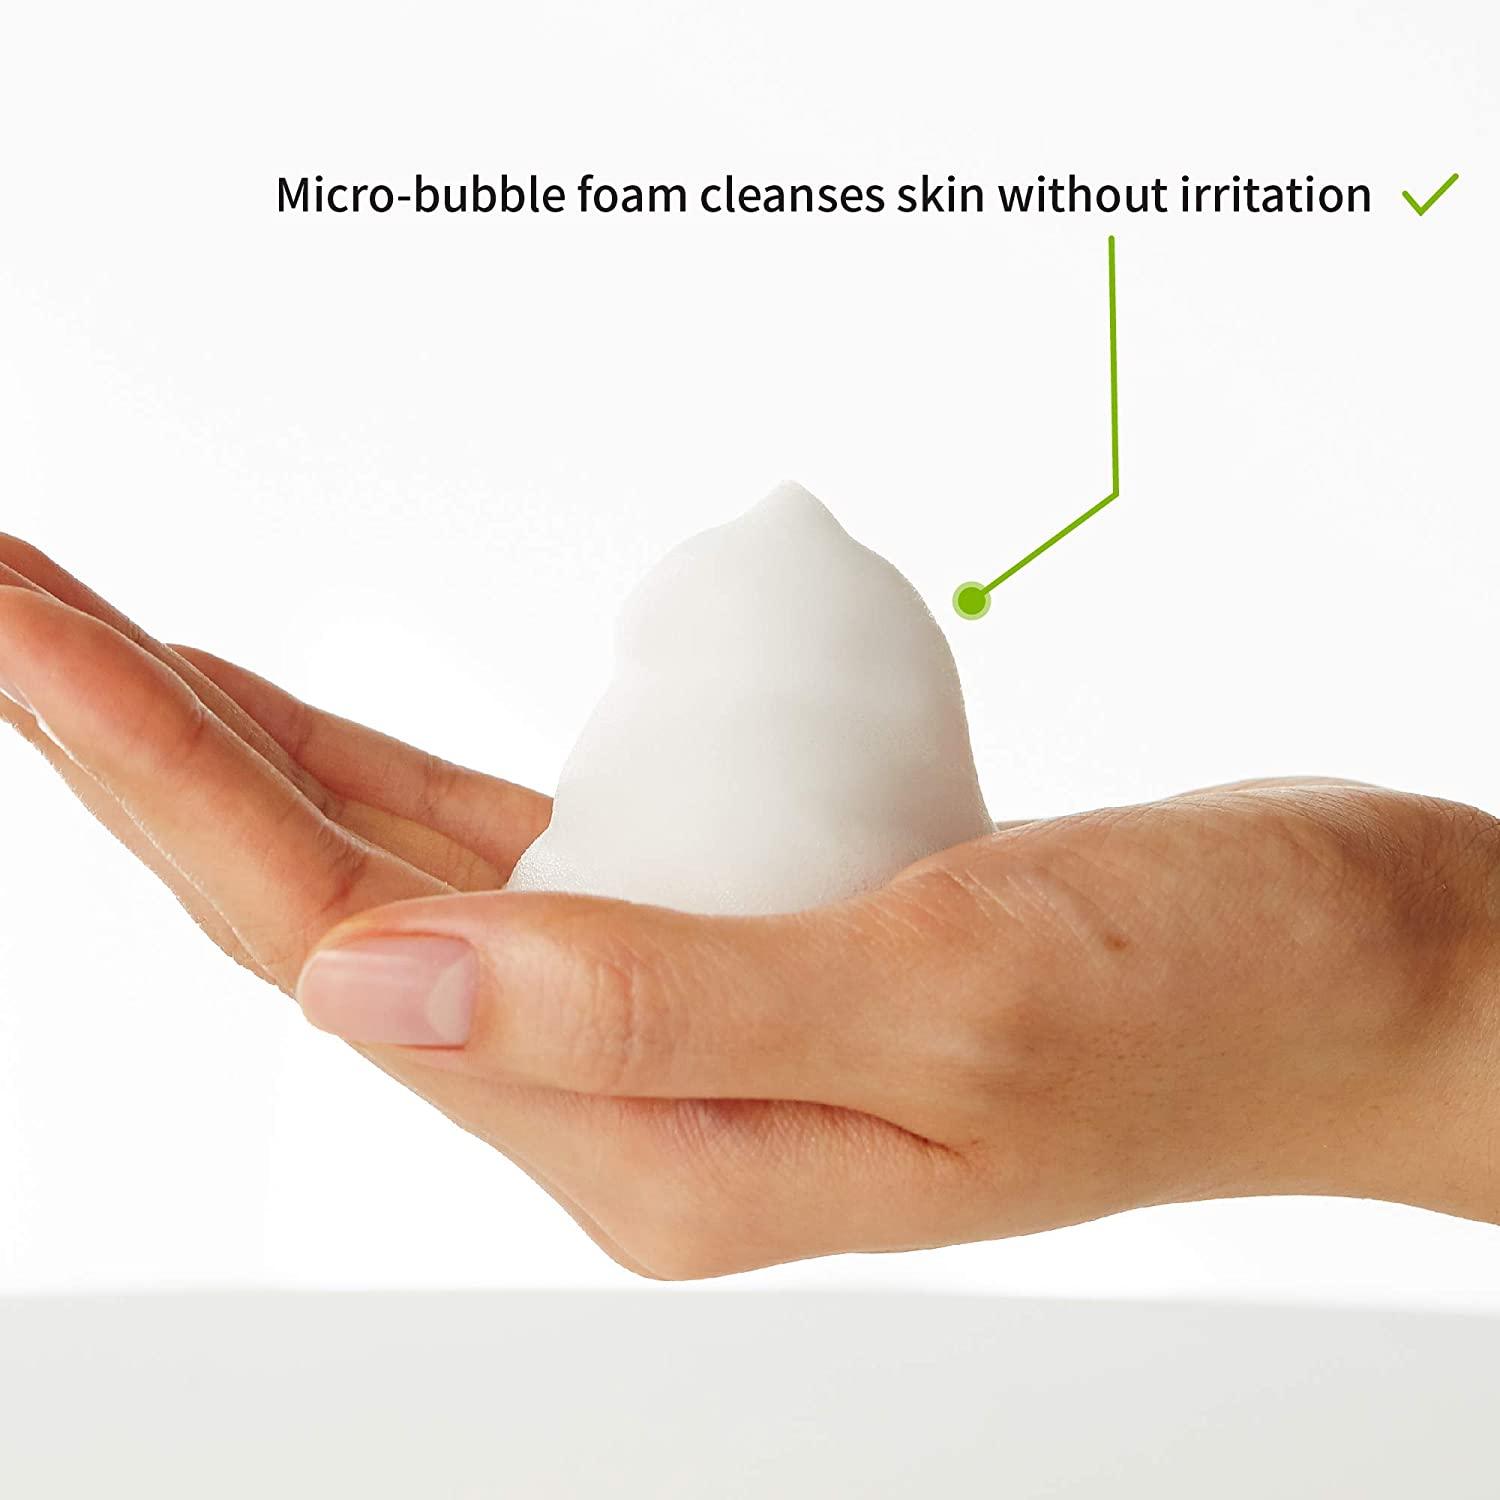 Iunik Centella Bubble Cleansing Foam